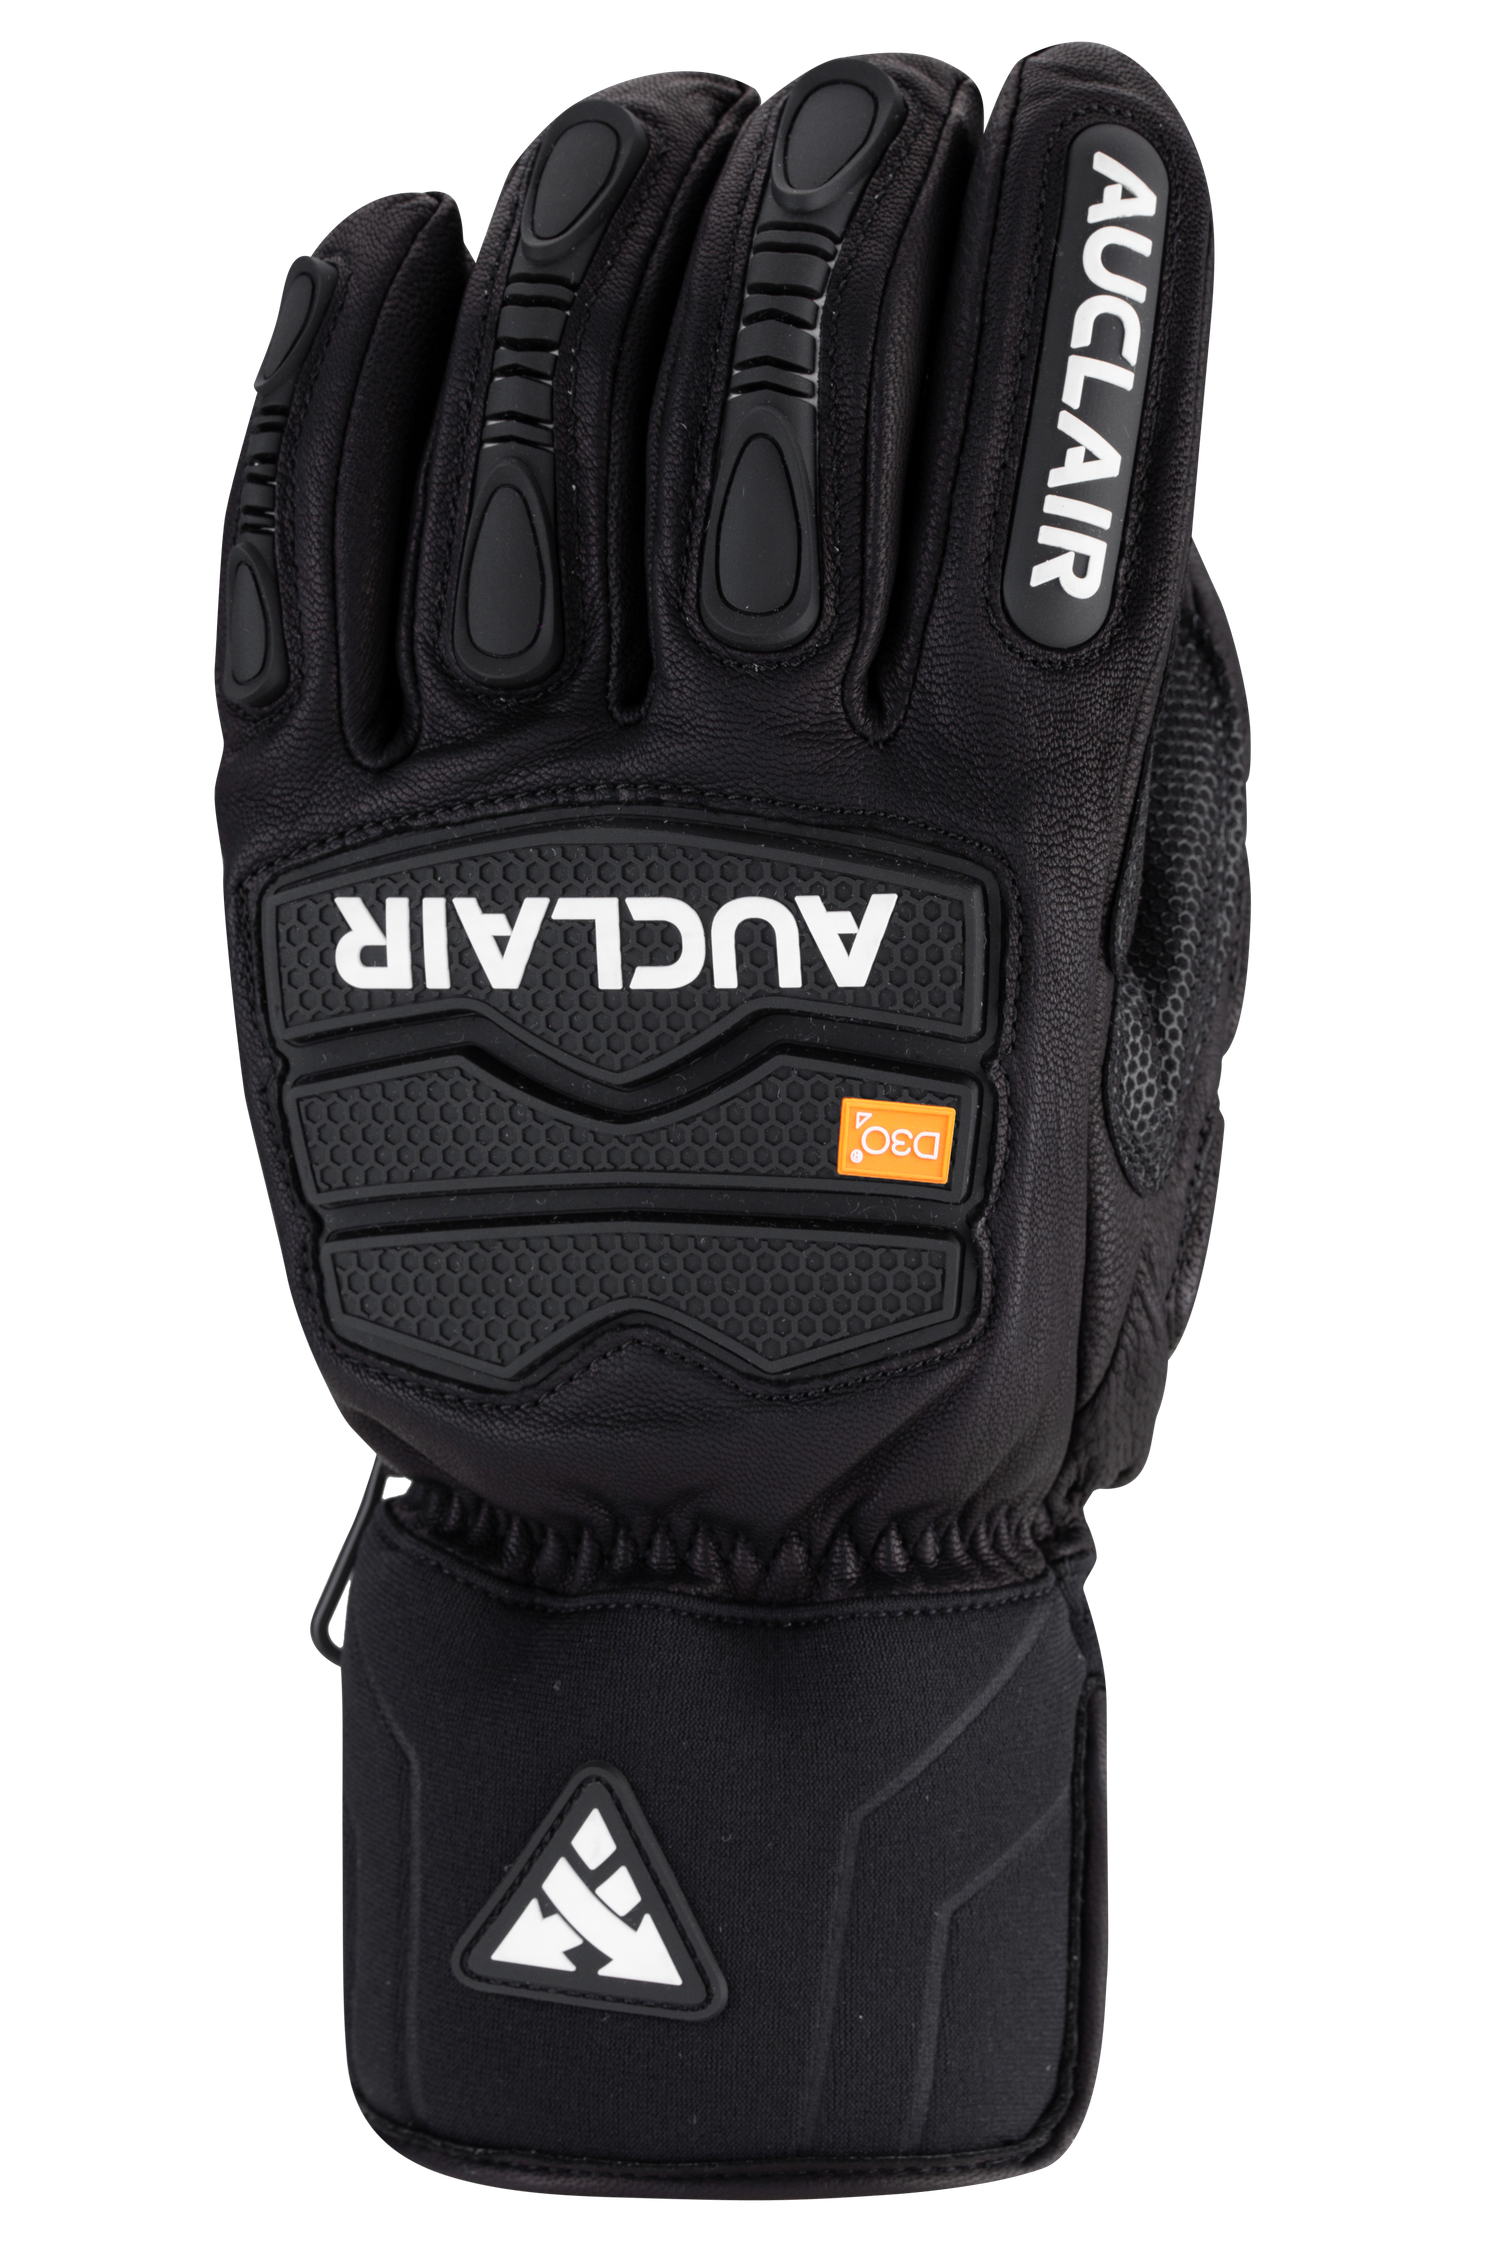 Race Fusion Gloves - Junior, Black